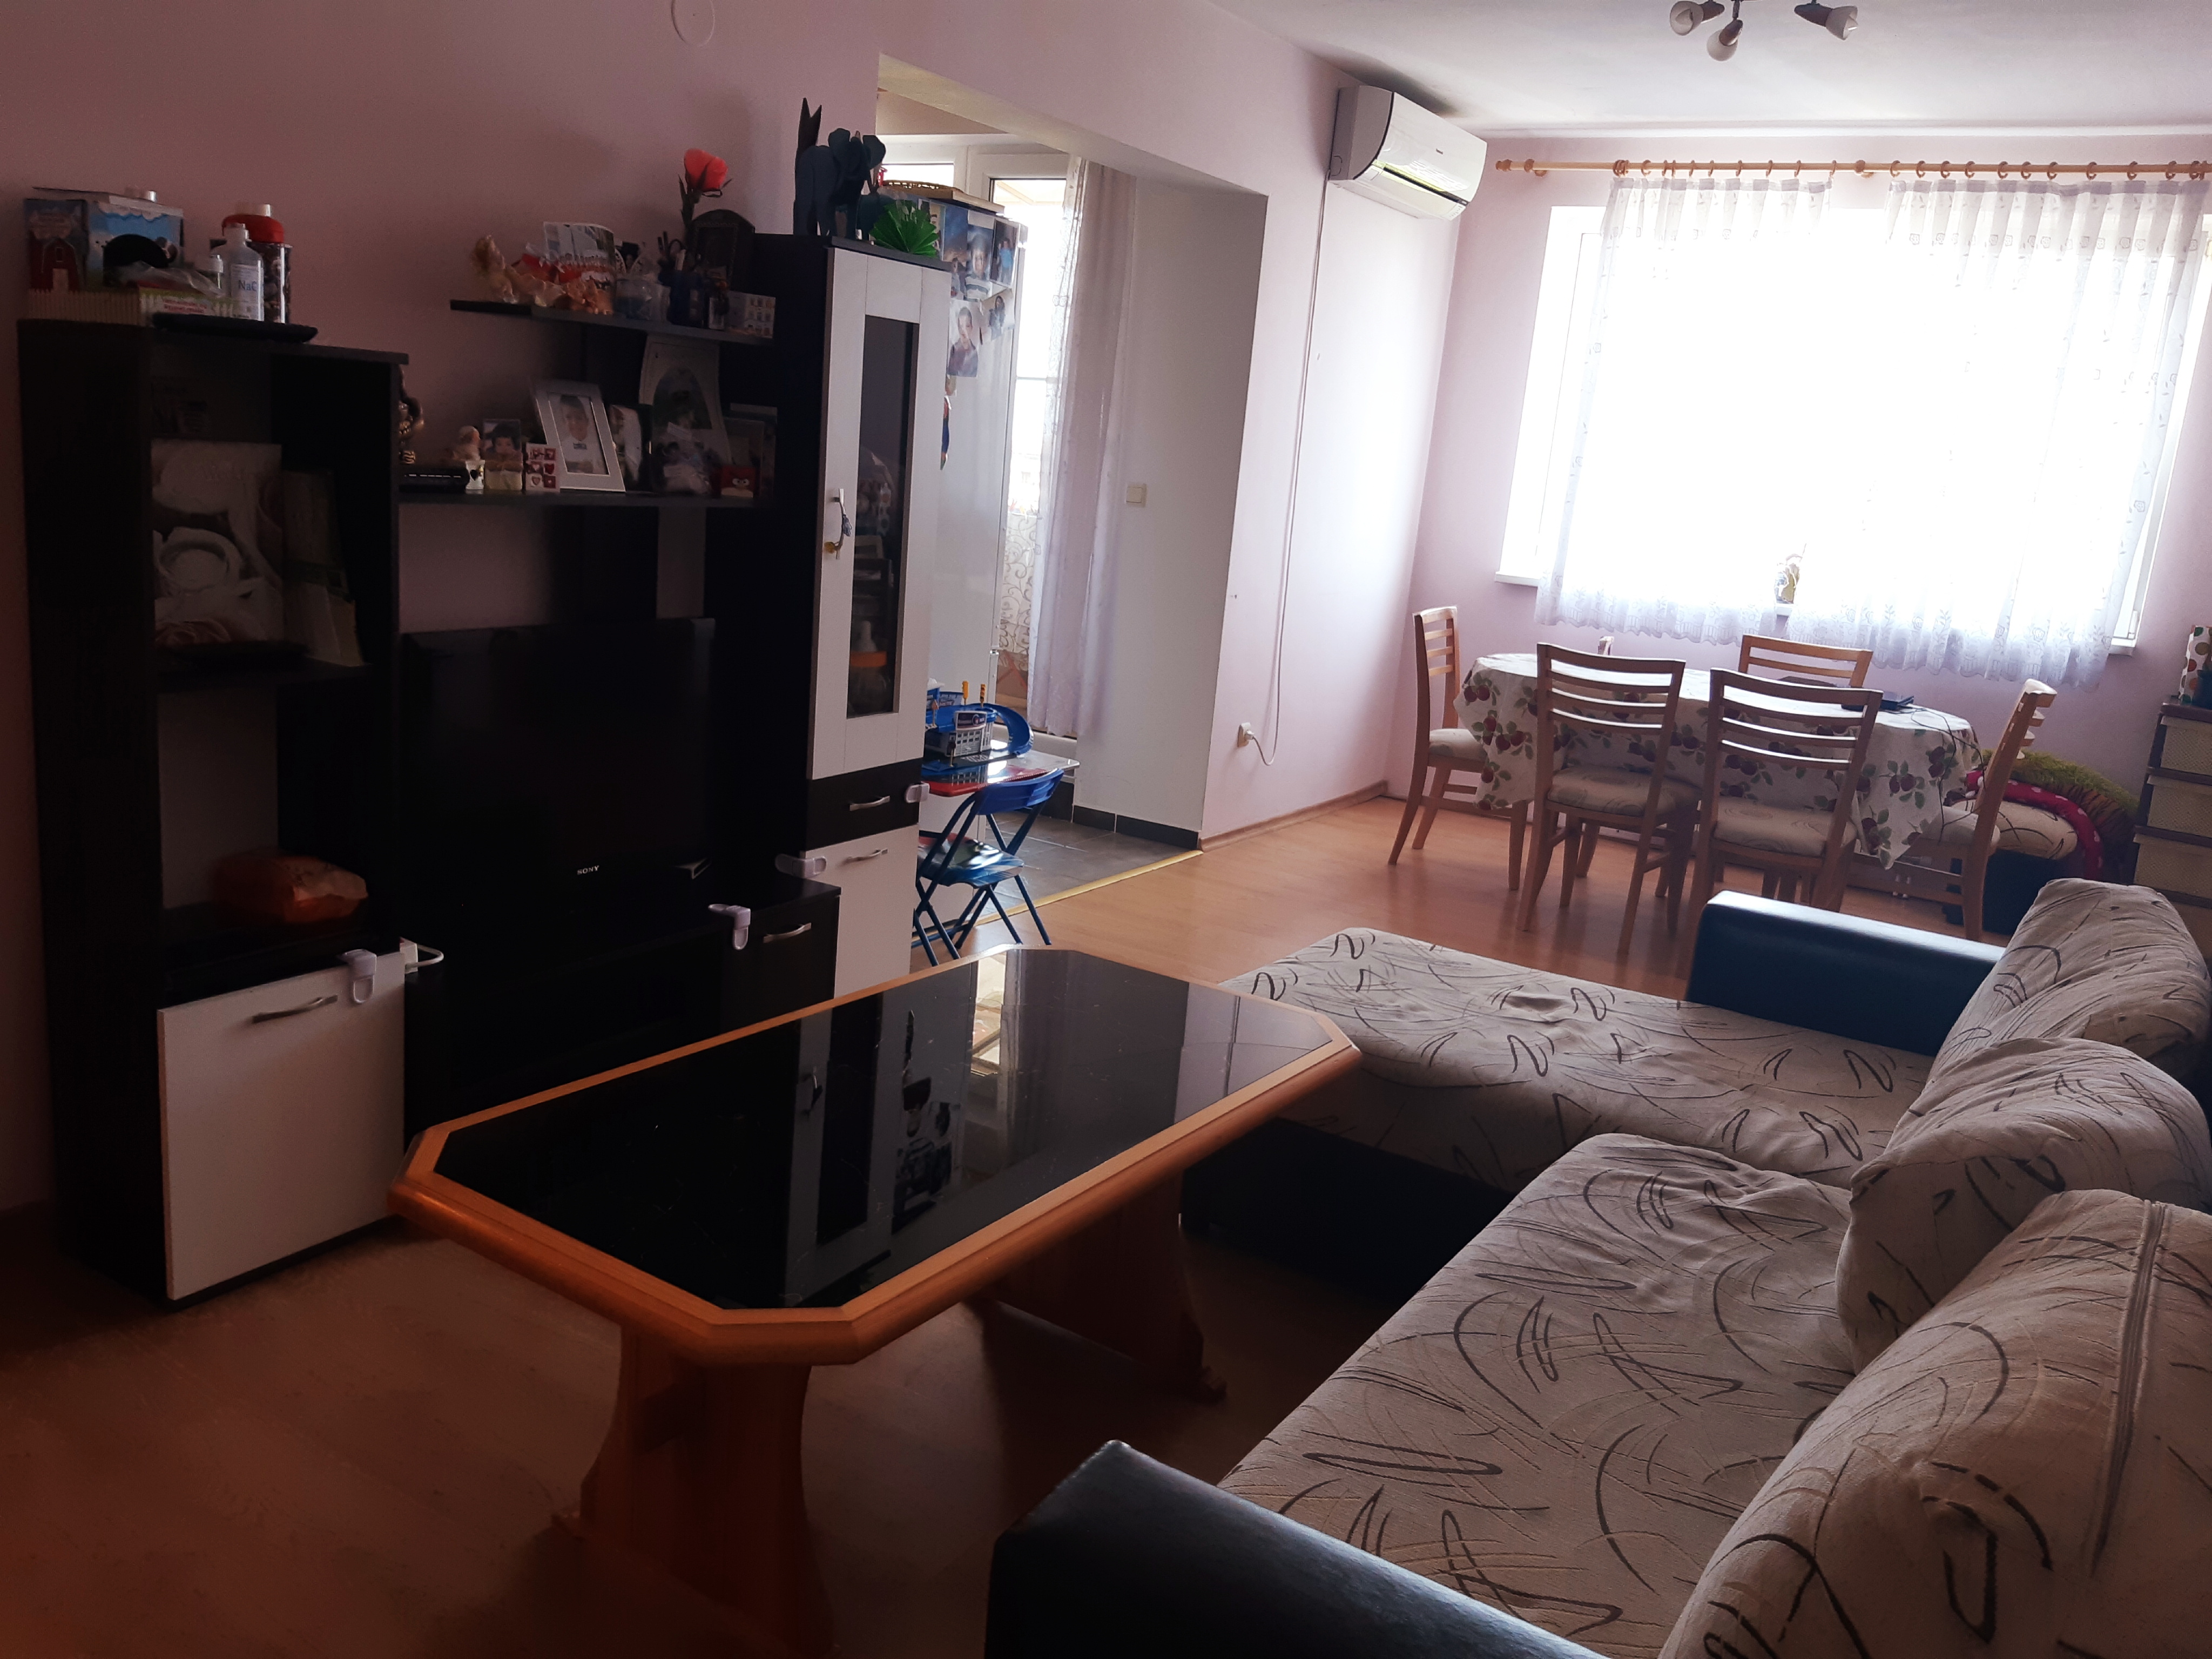 3-стаен апартамент с гараж, ж.к. Витоша, цена 104900 евро- ПРОДАДЕН! - image